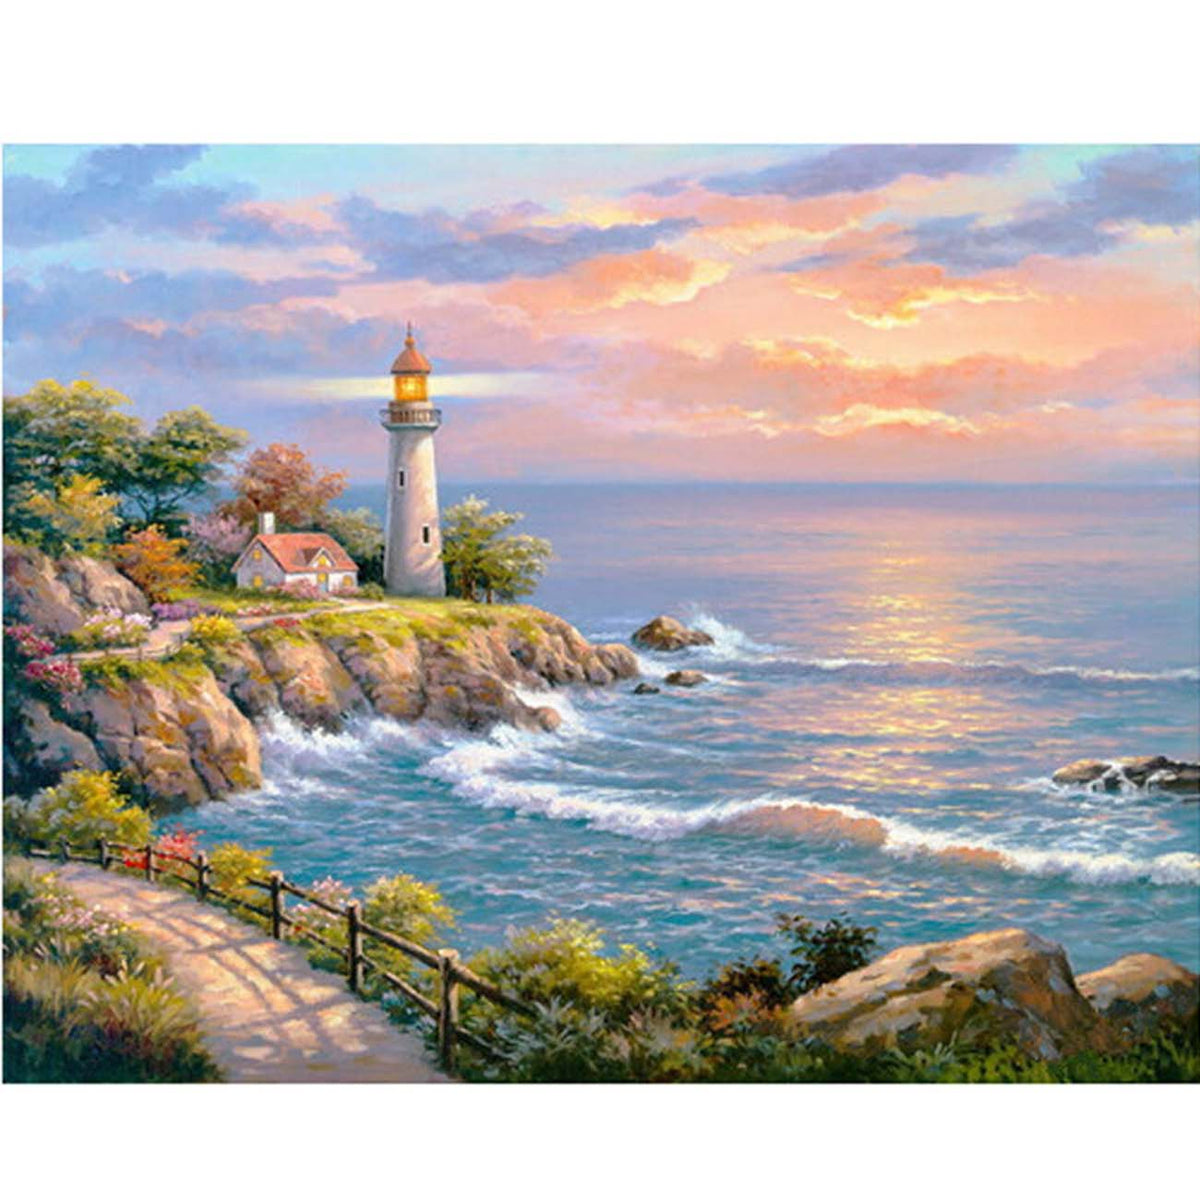 Sunset Lighthouse by the Sea 5D Diamond Painting - 5diamondpainting.com